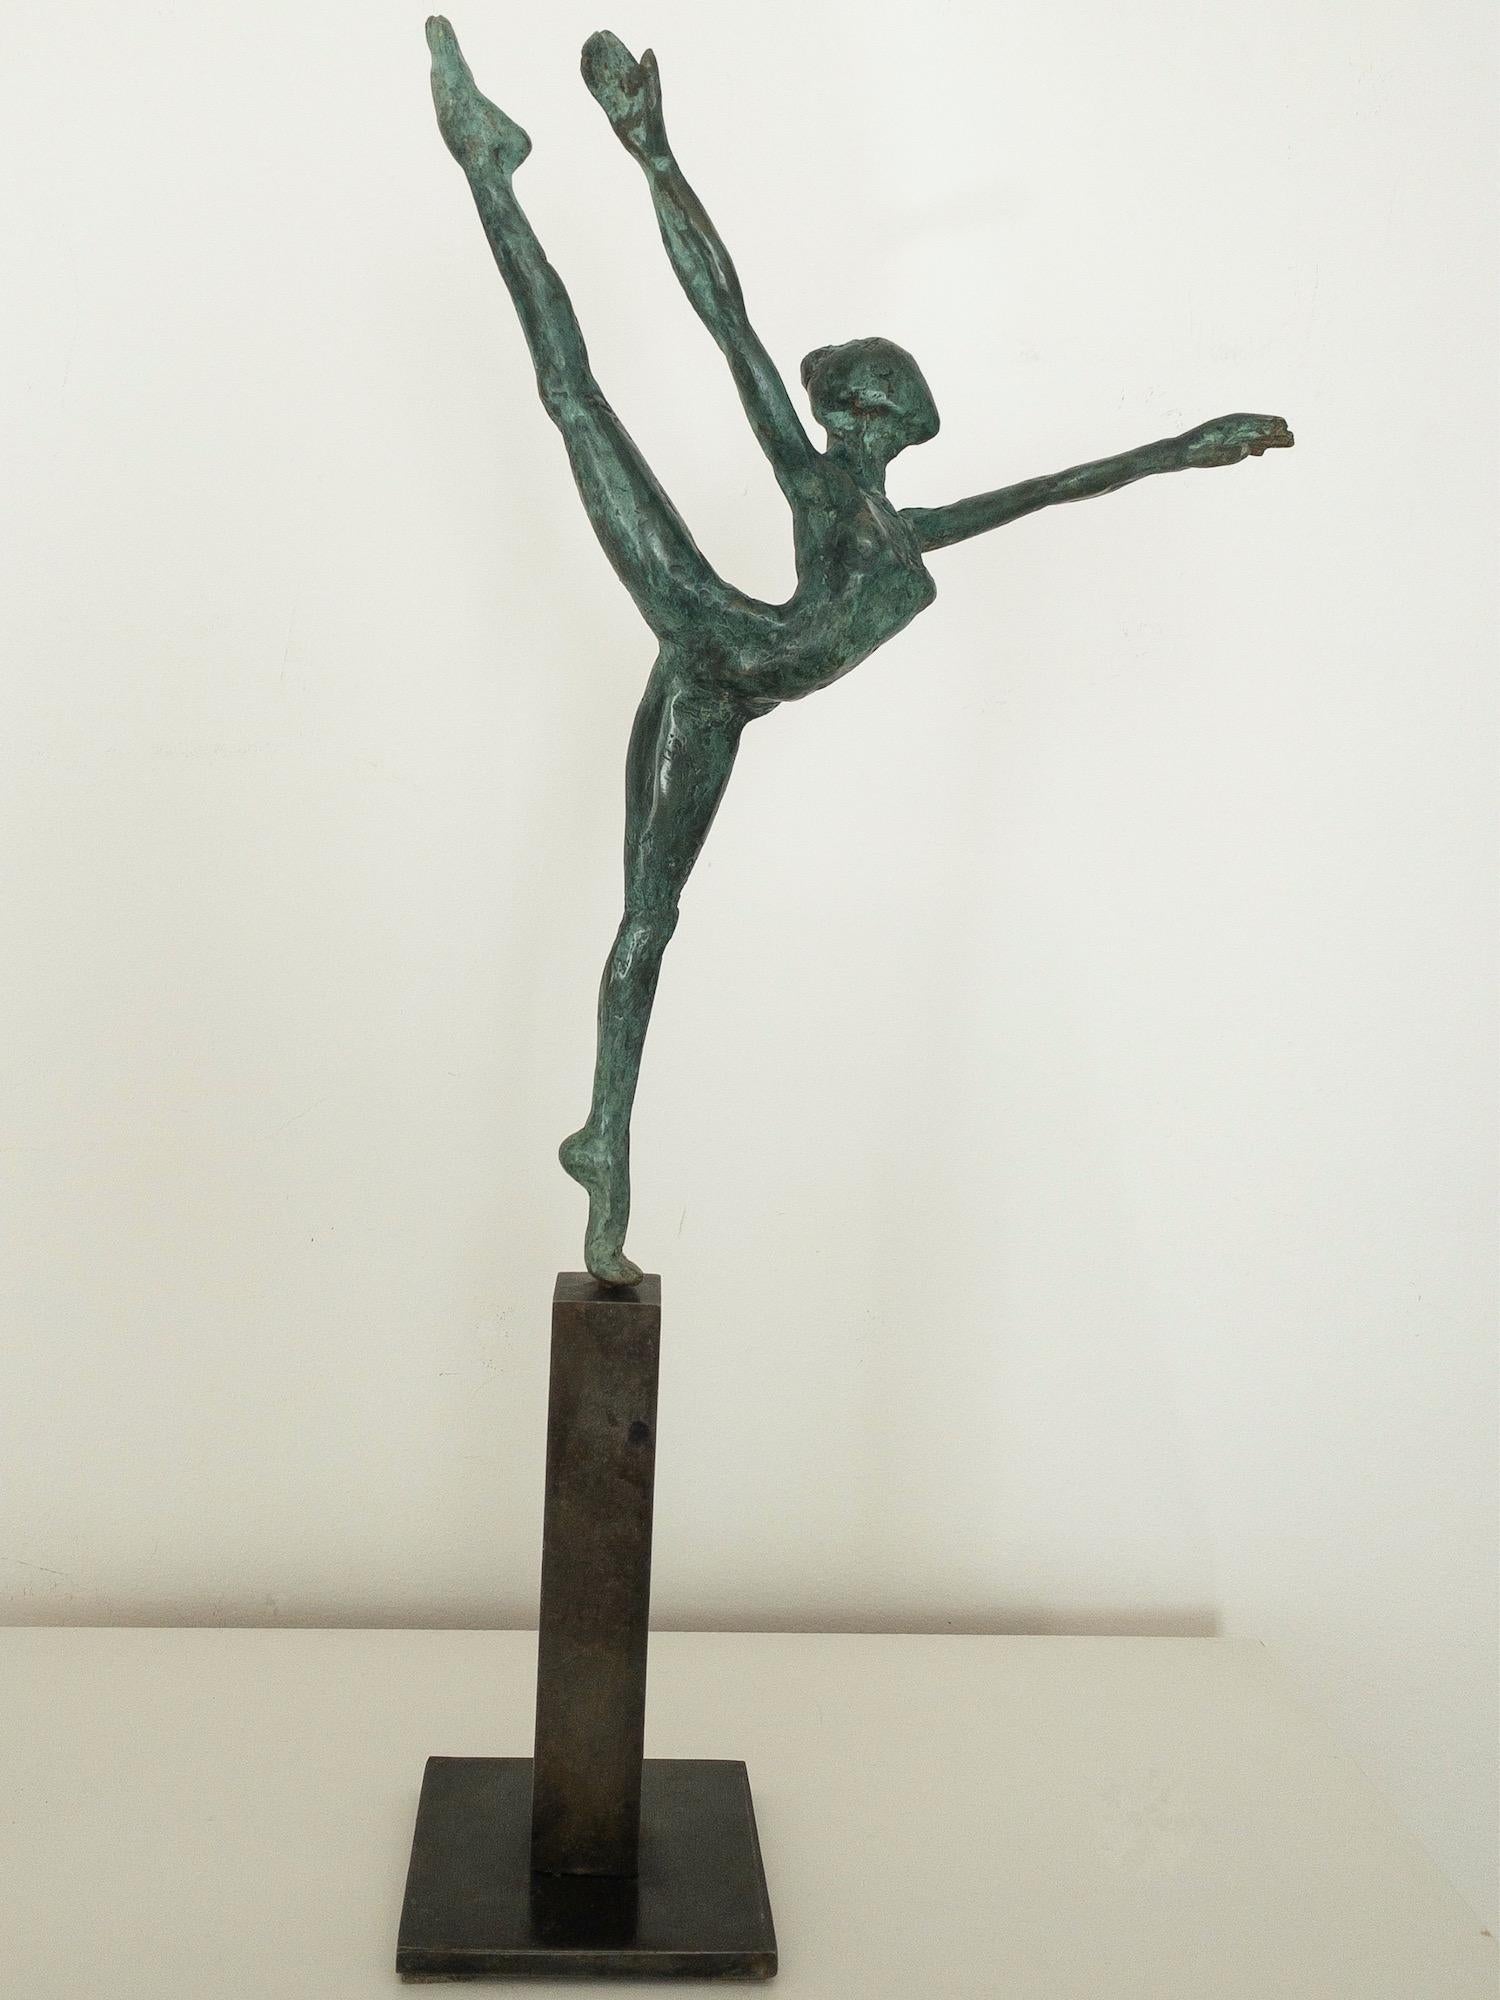 Danseuse "Elancée" II is a bronze sculpture by contemporary artist Yann Guillon, dimensions are 28 cm × 21 cm × 4 cm (11 × 8.3 × 1.6 in). Dimensions of the metal base: 13 cm x 8 cm x 8 cm (5.1 x 3.1 x 3.1 in). Height of the sculpture with the metal